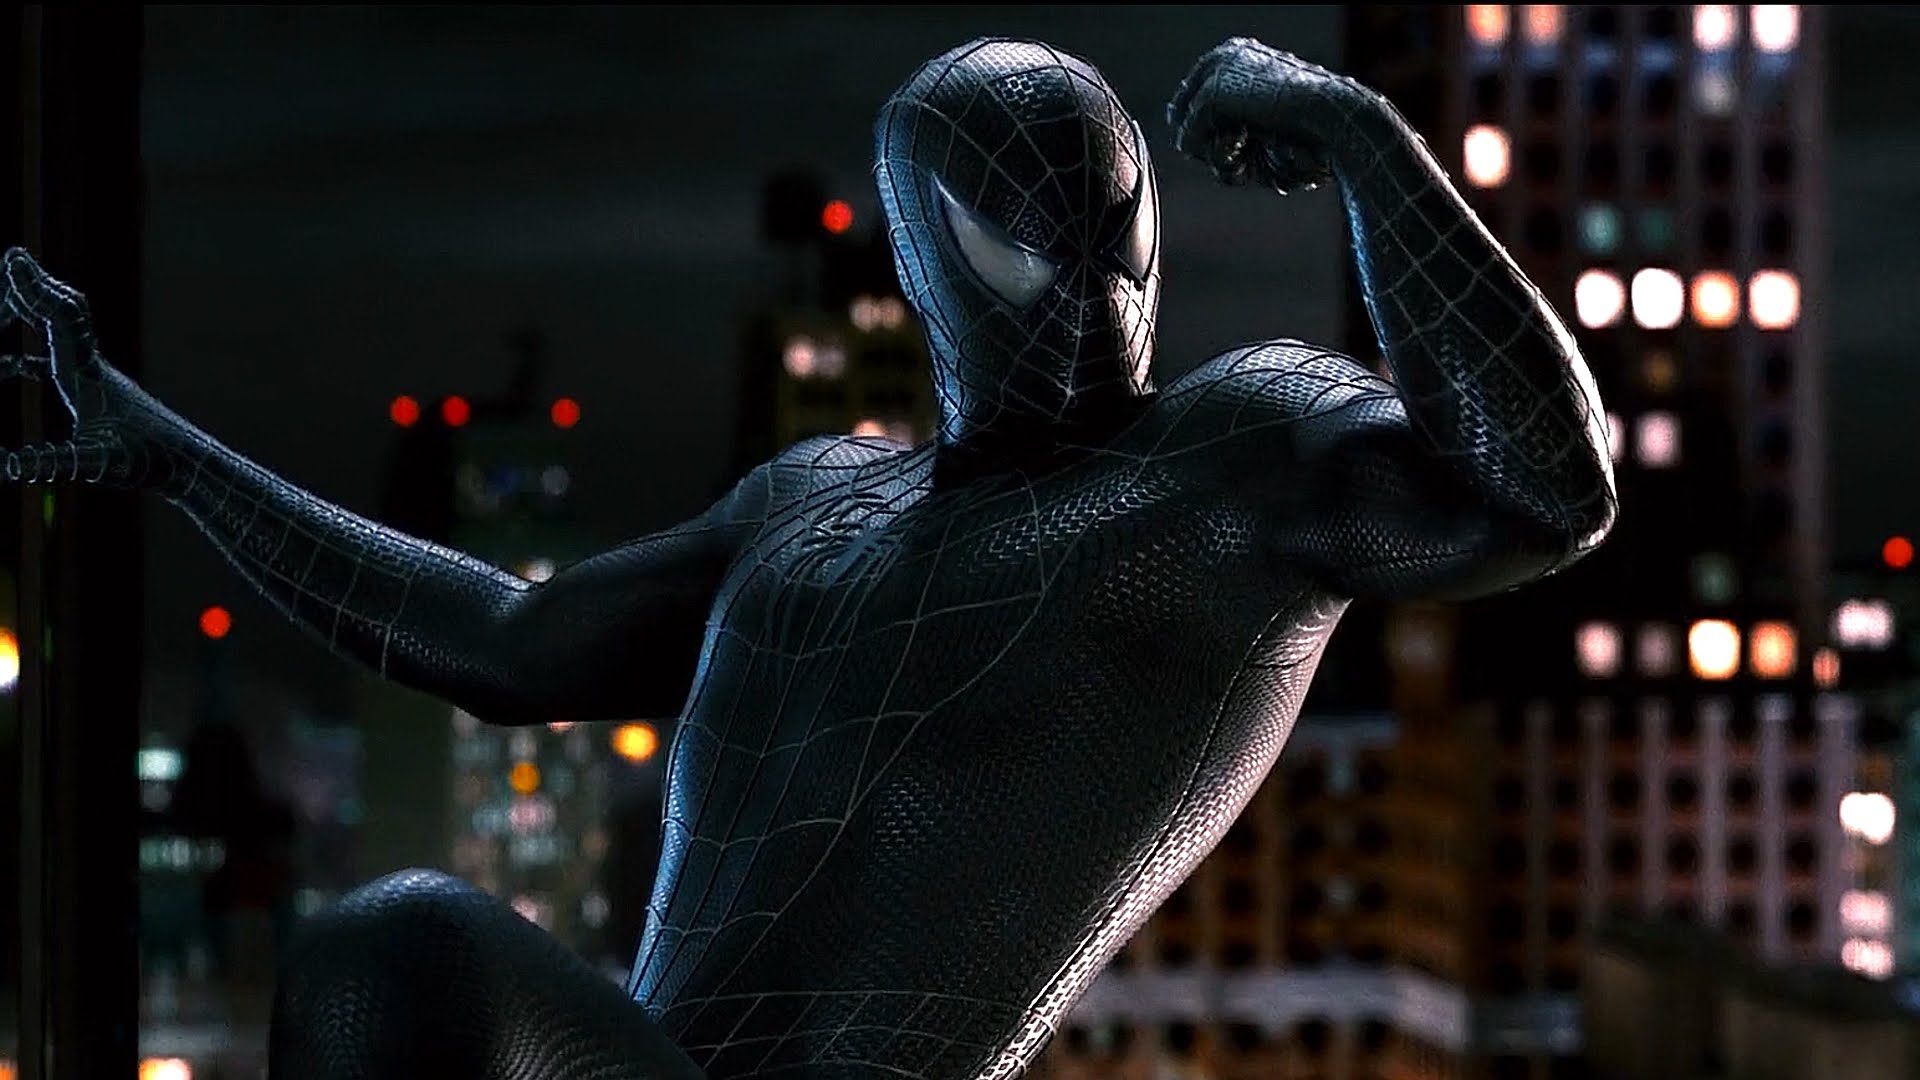 Hd Quality Wallpaper - Spider Man 3 Black Suit - HD Wallpaper 